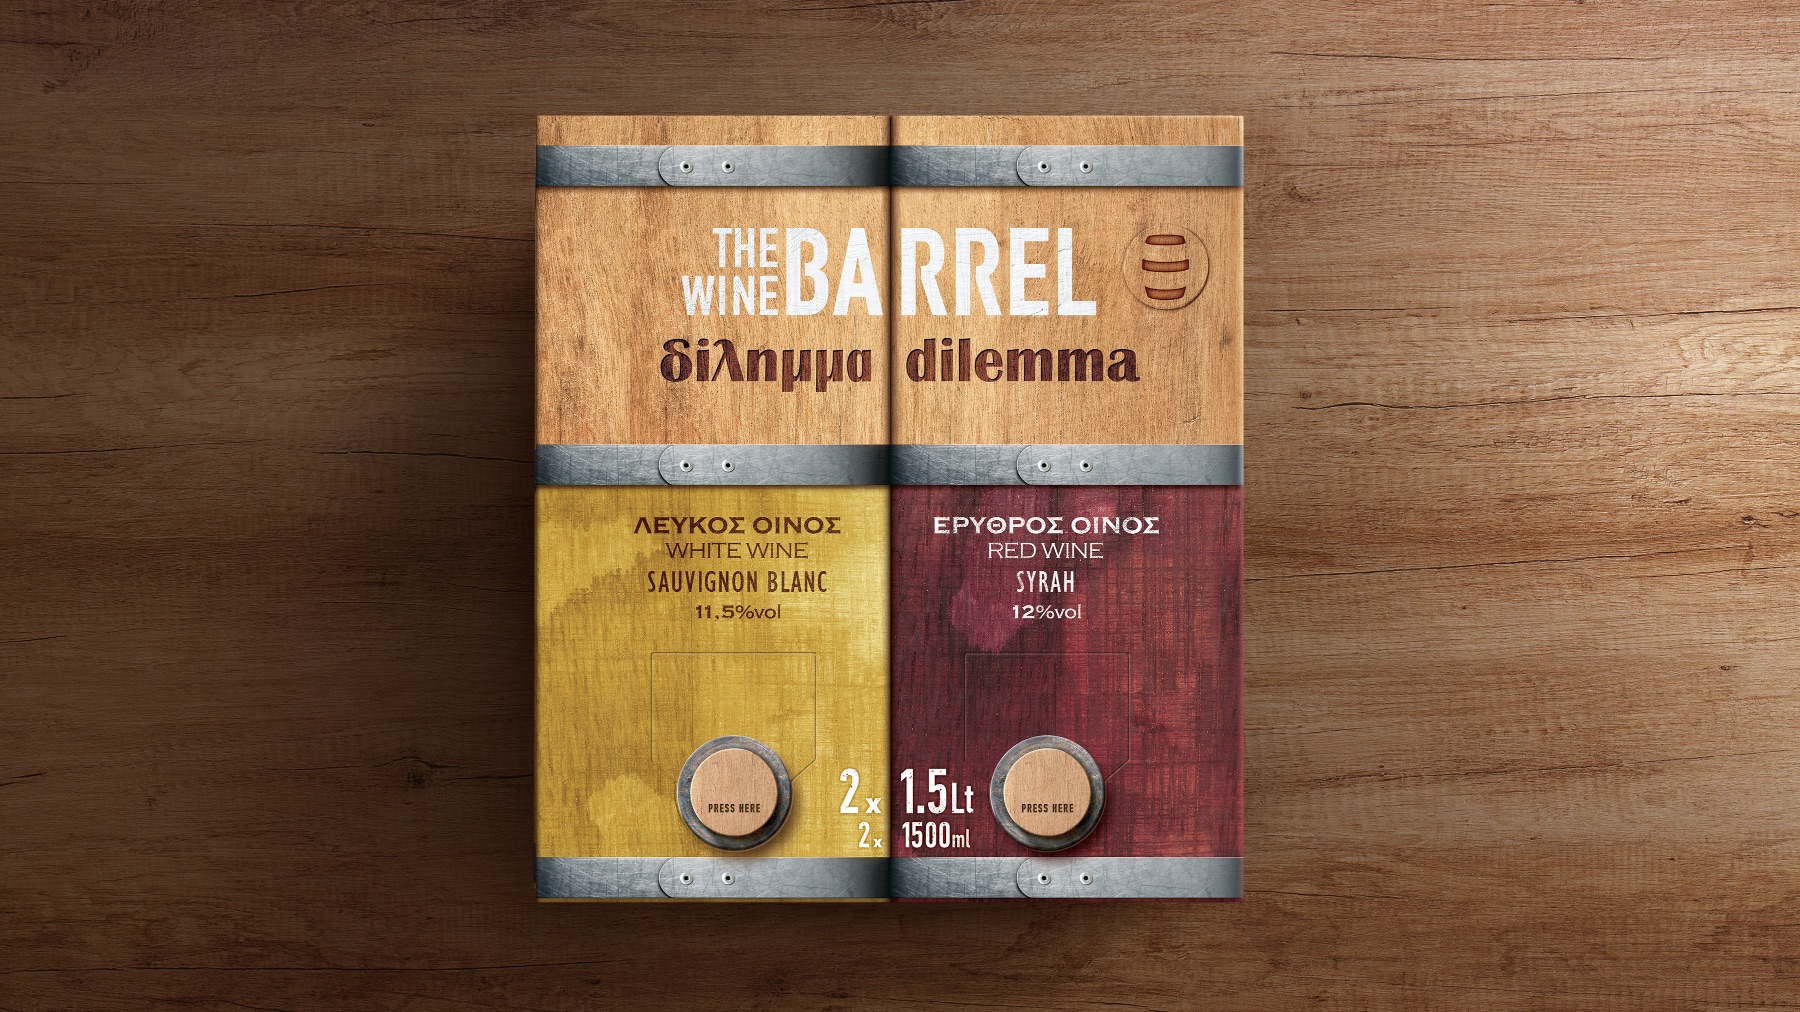 Packaging Design for The Wine Barrel – Dilemma